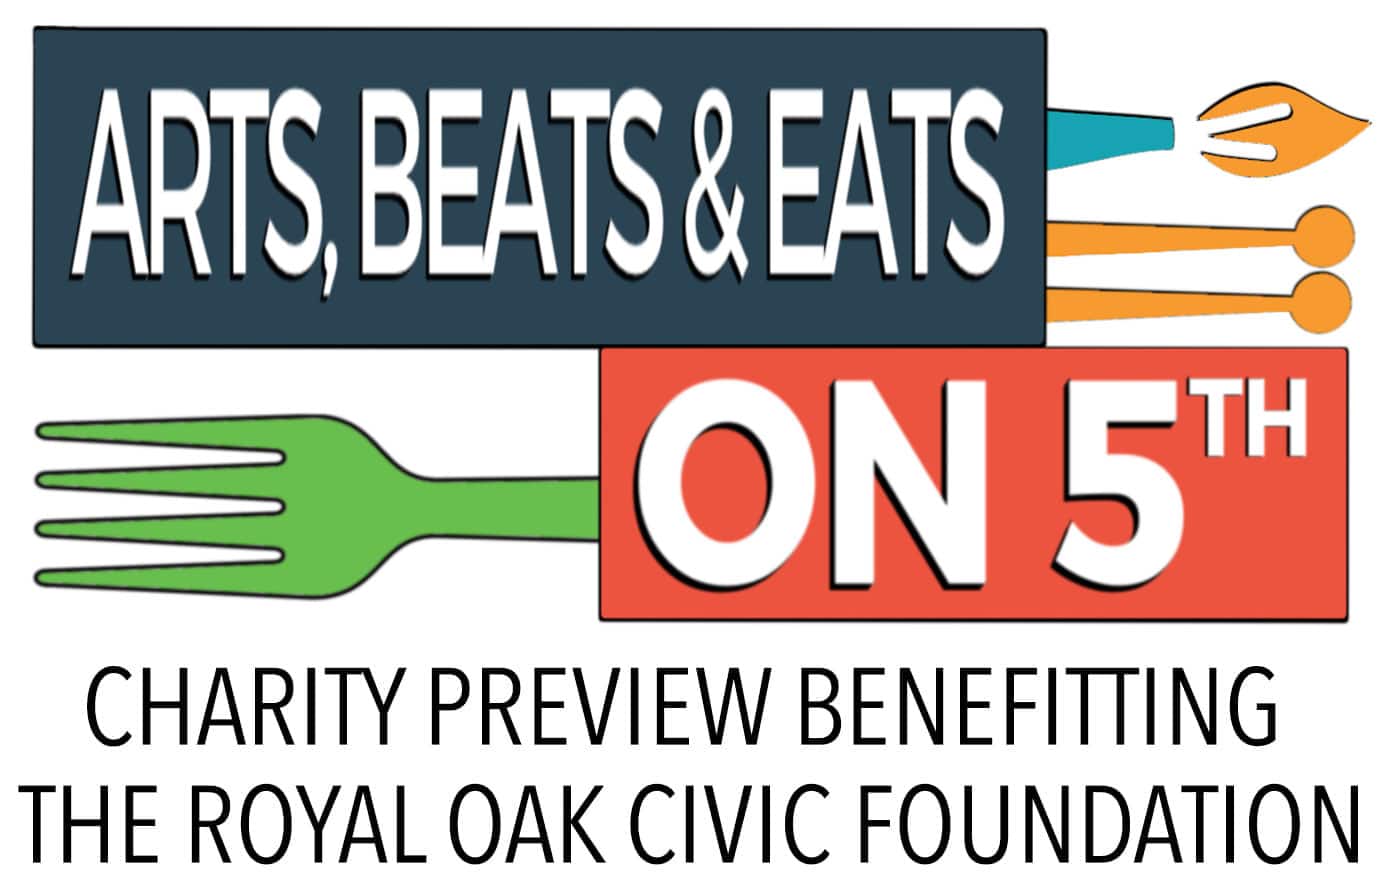 Arts Beats & Eats on 5th